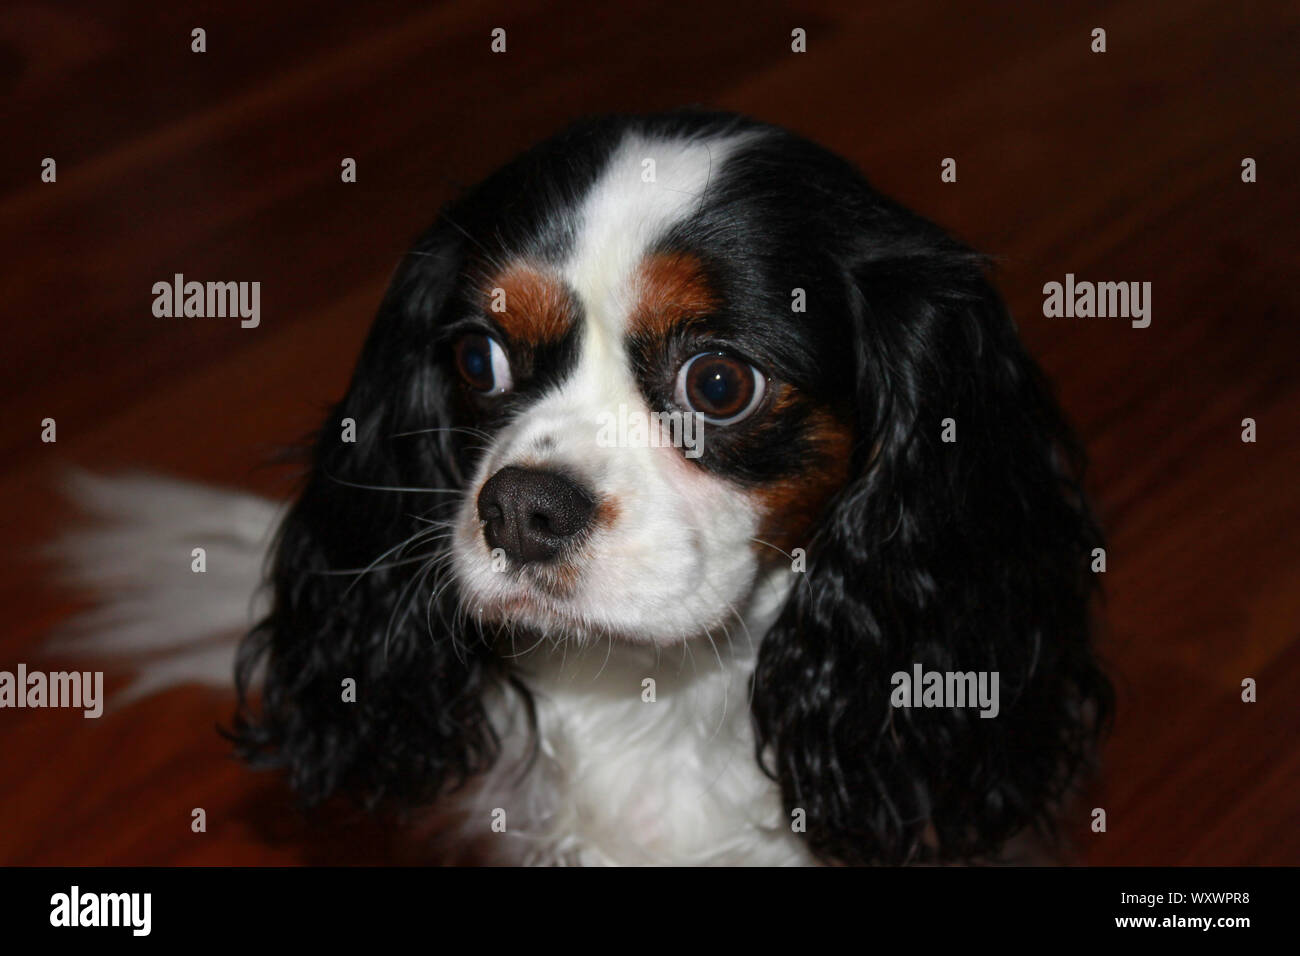 Small dog with sad eyes adoption concept. Stock Photo